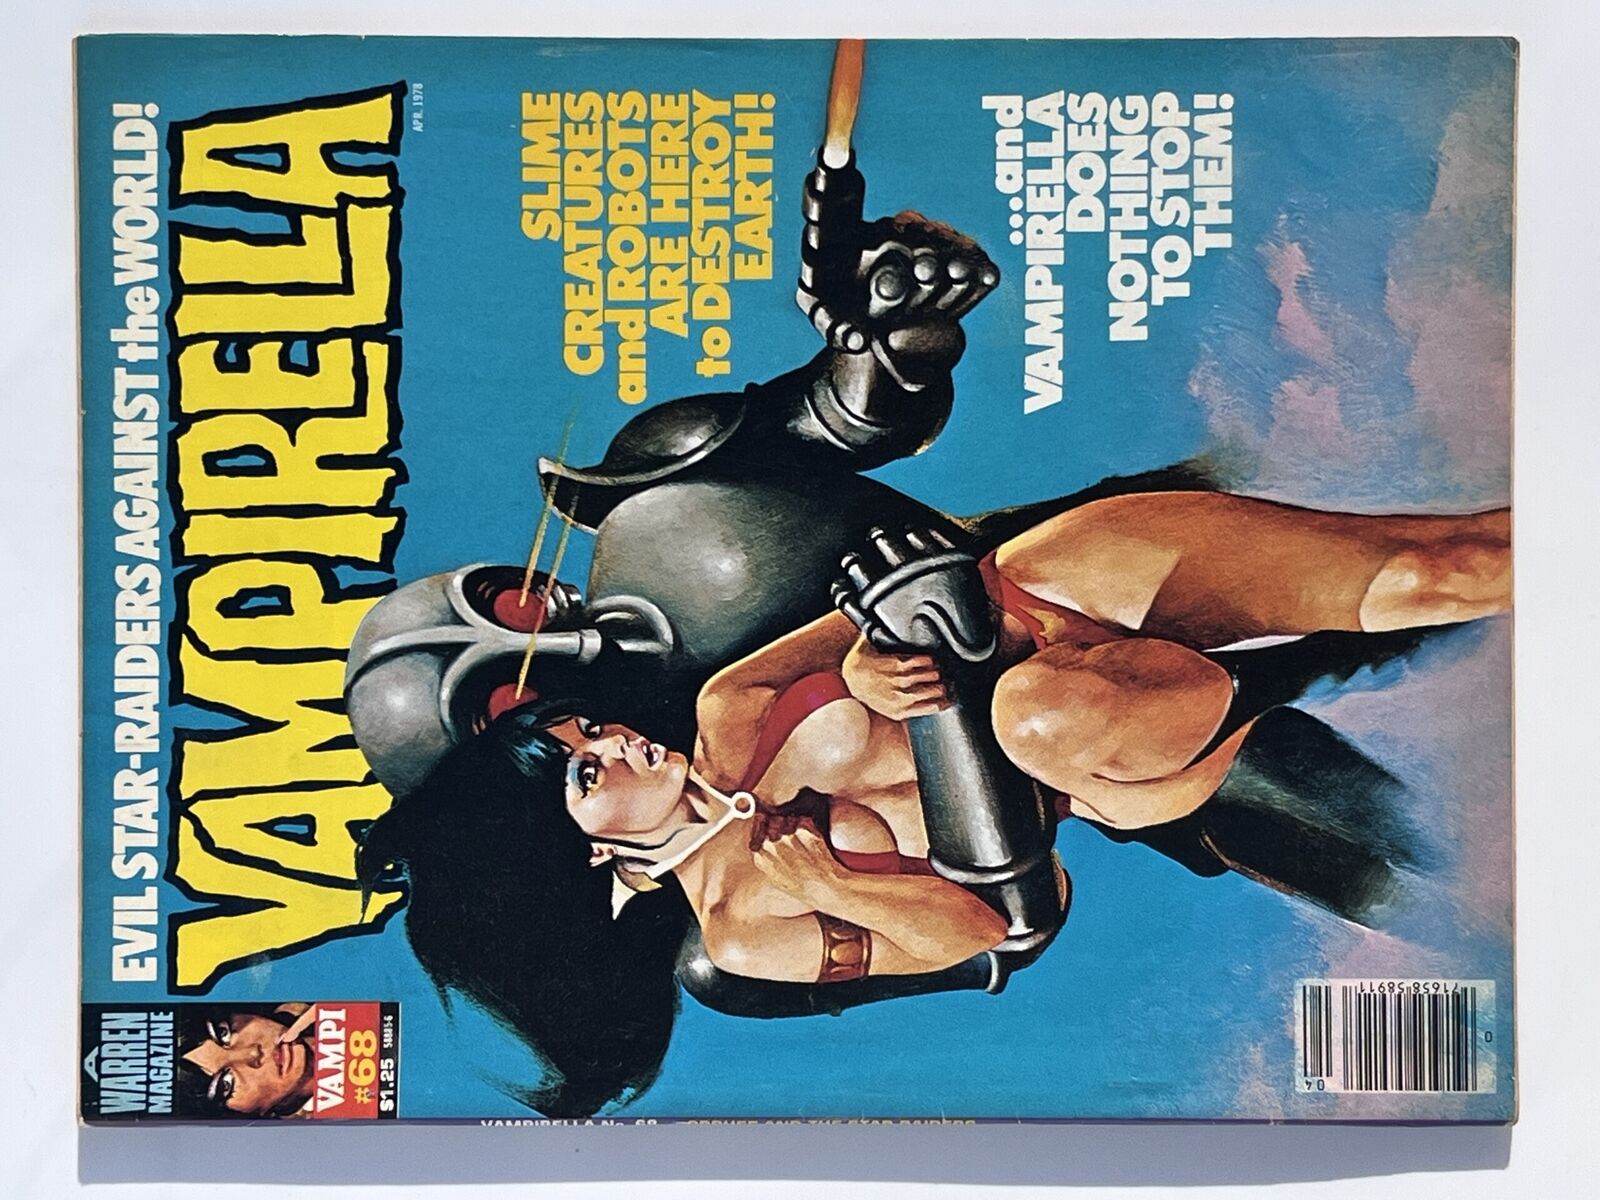 Vampirella #68 (1978) in Ungraded